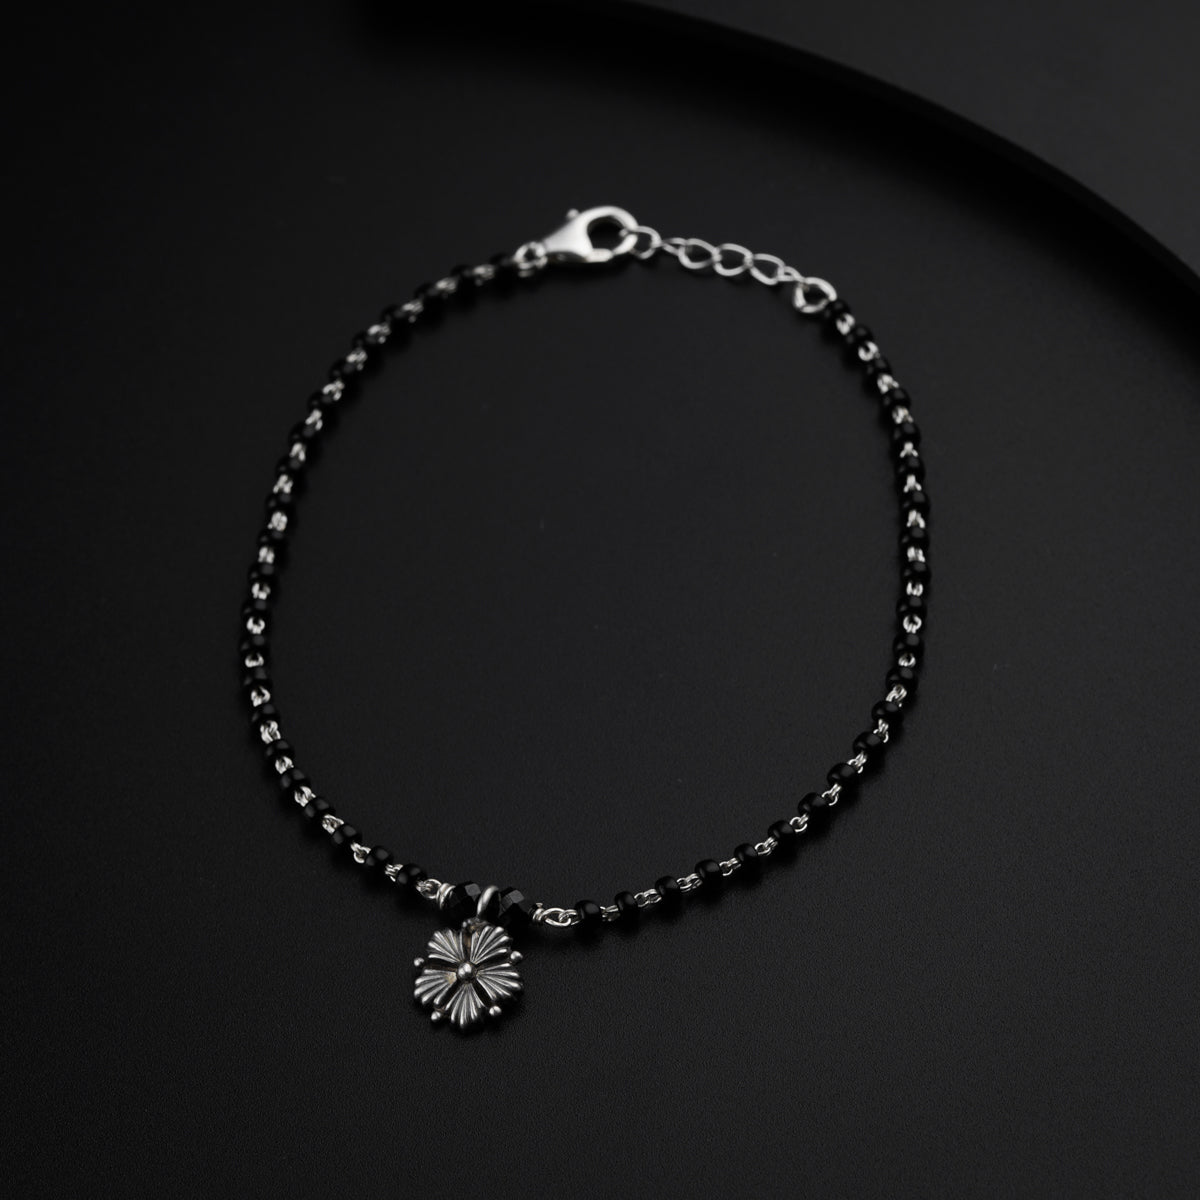 a black beaded bracelet with a flower charm